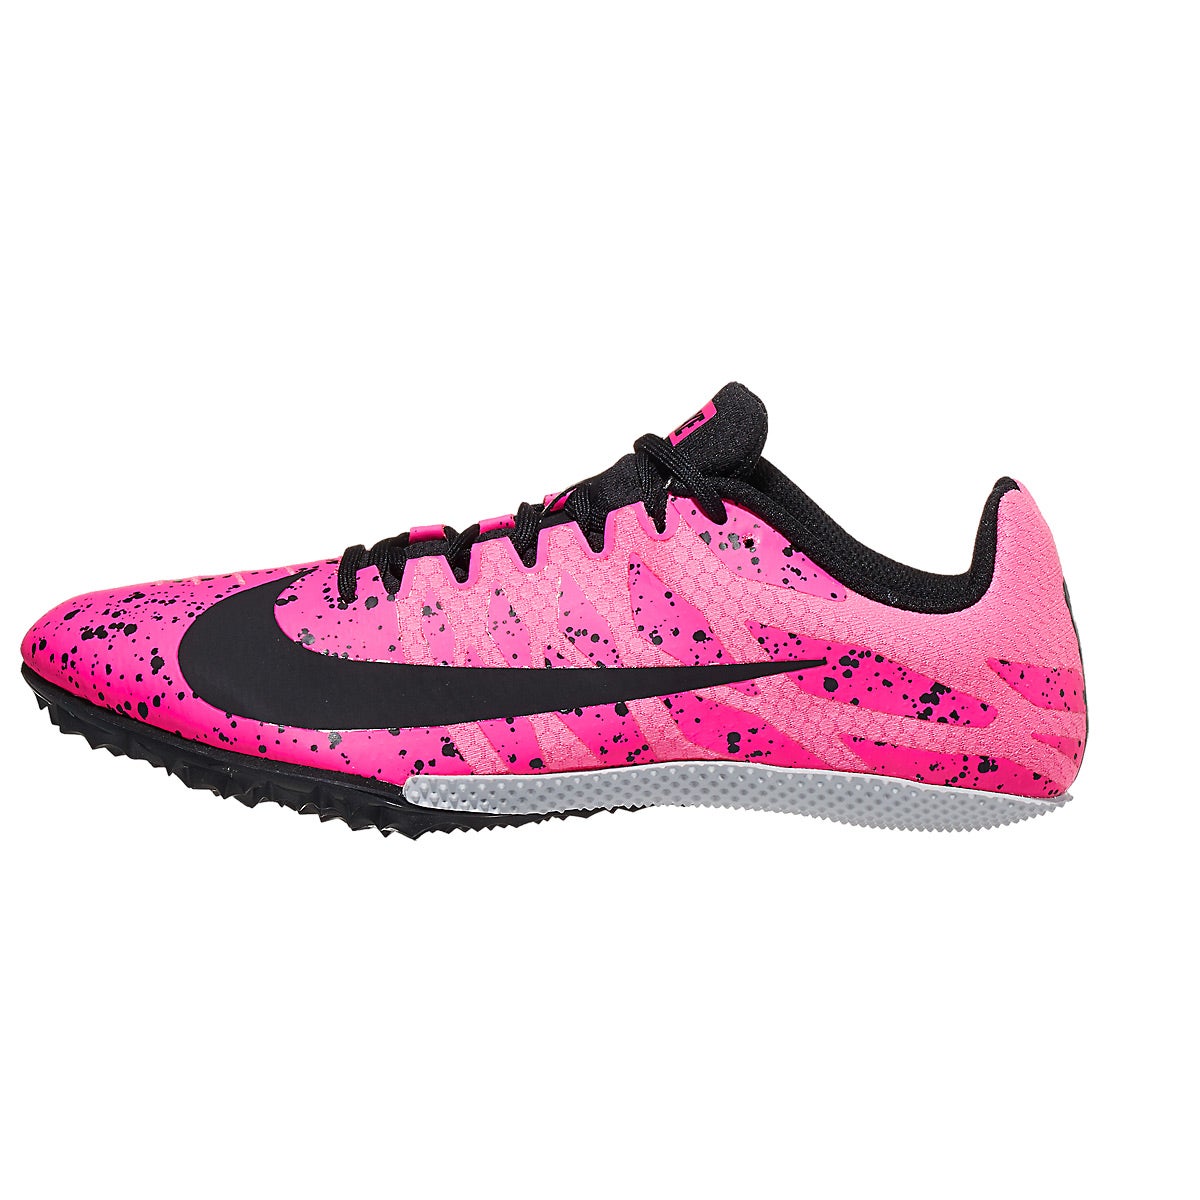 Nike Zoom Rival S 9 Men's Spikes Pink Blast/Black 360° View | Running